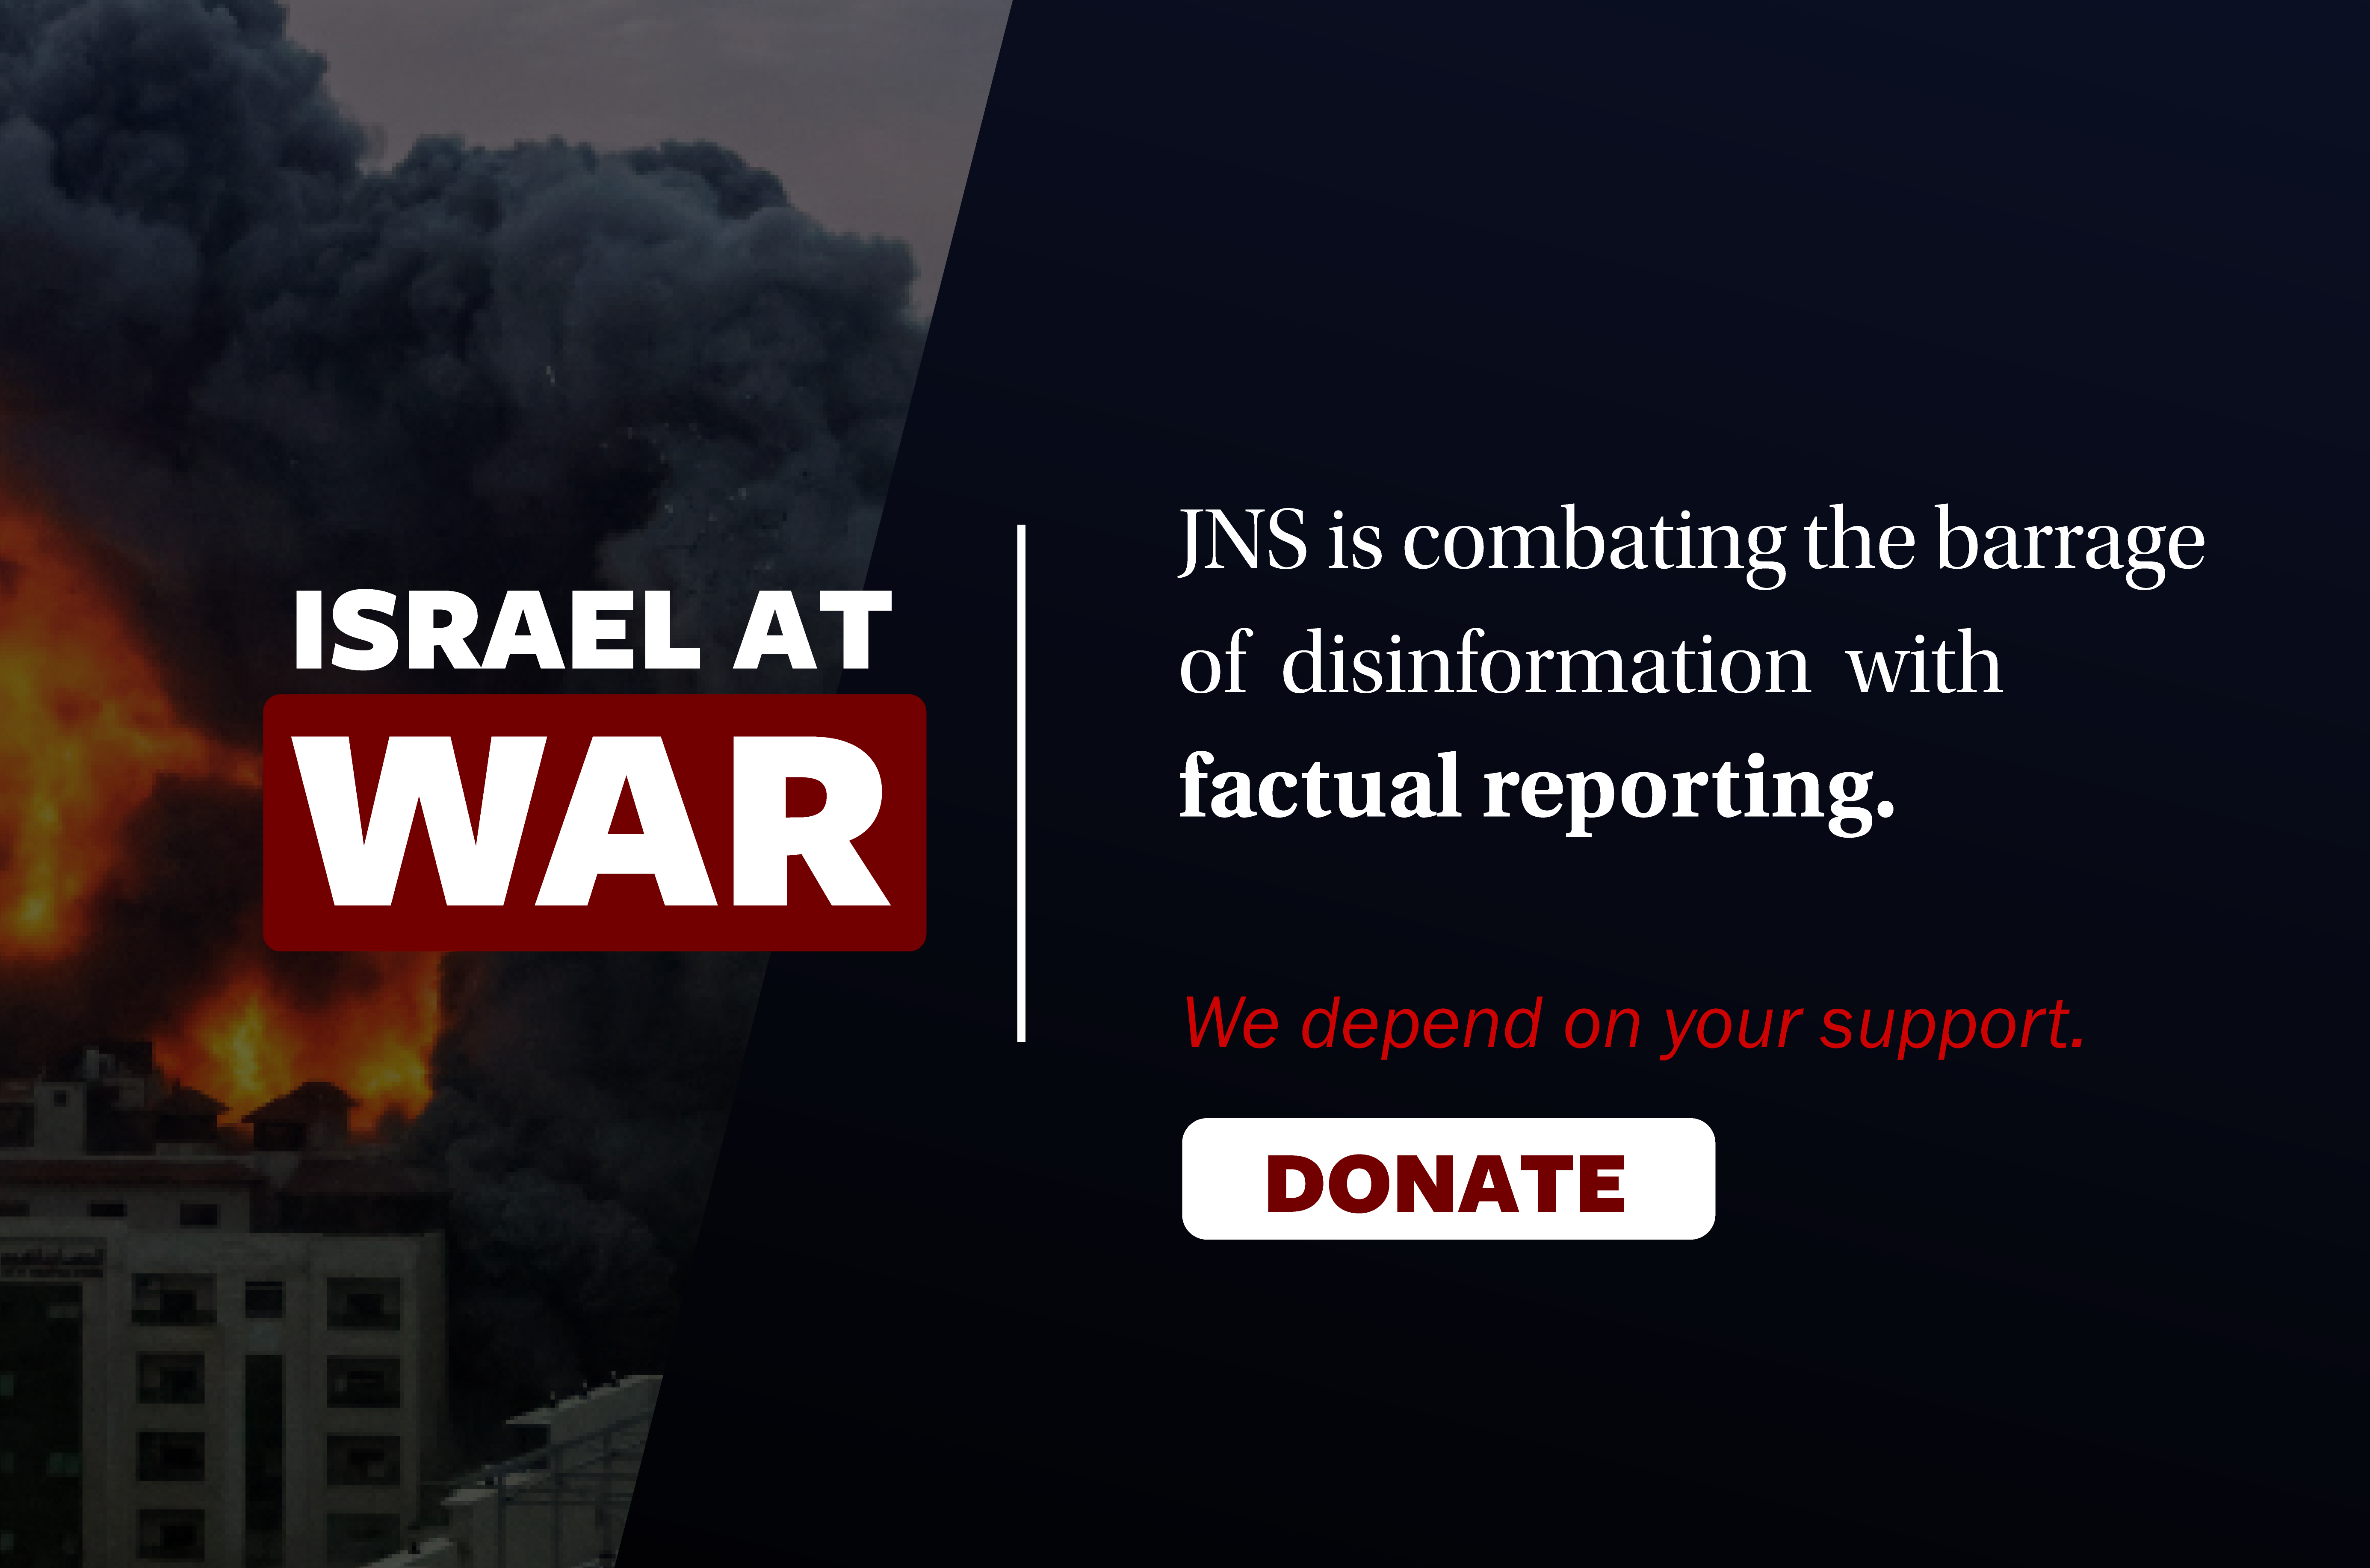 Israel at War - Support JNS